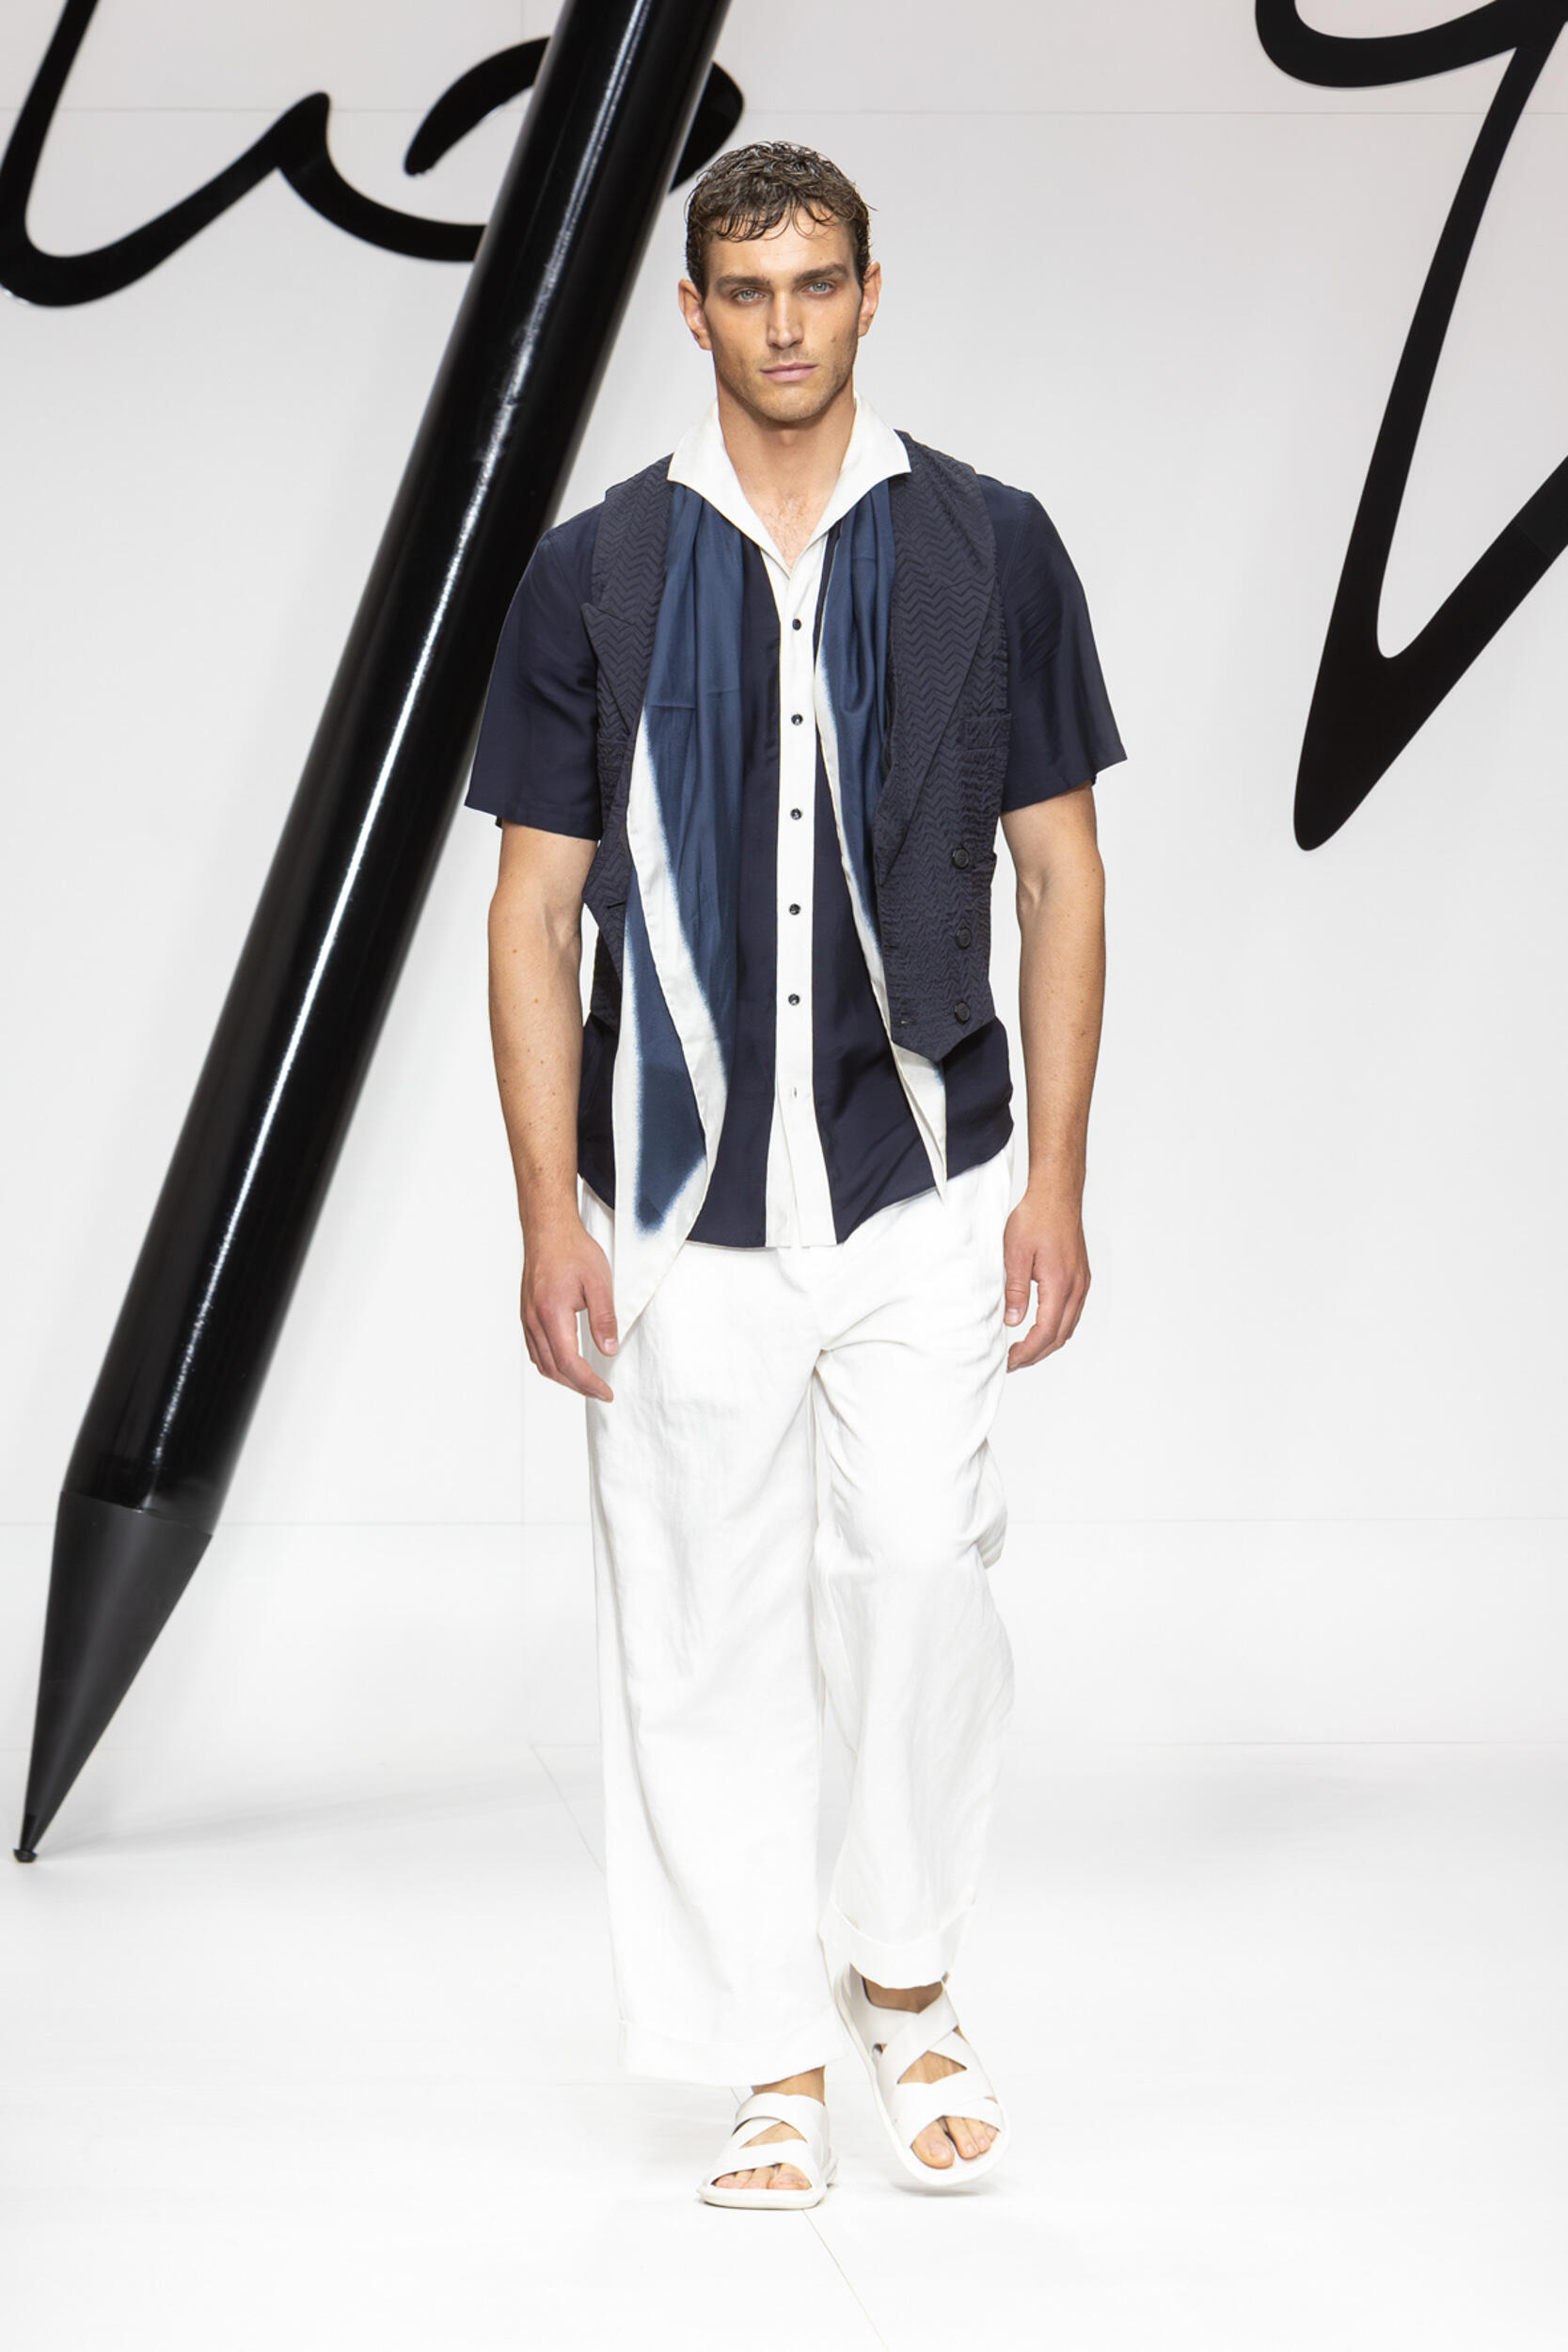 Giorgio Armani Spring 2024 Men’s Fashion Show